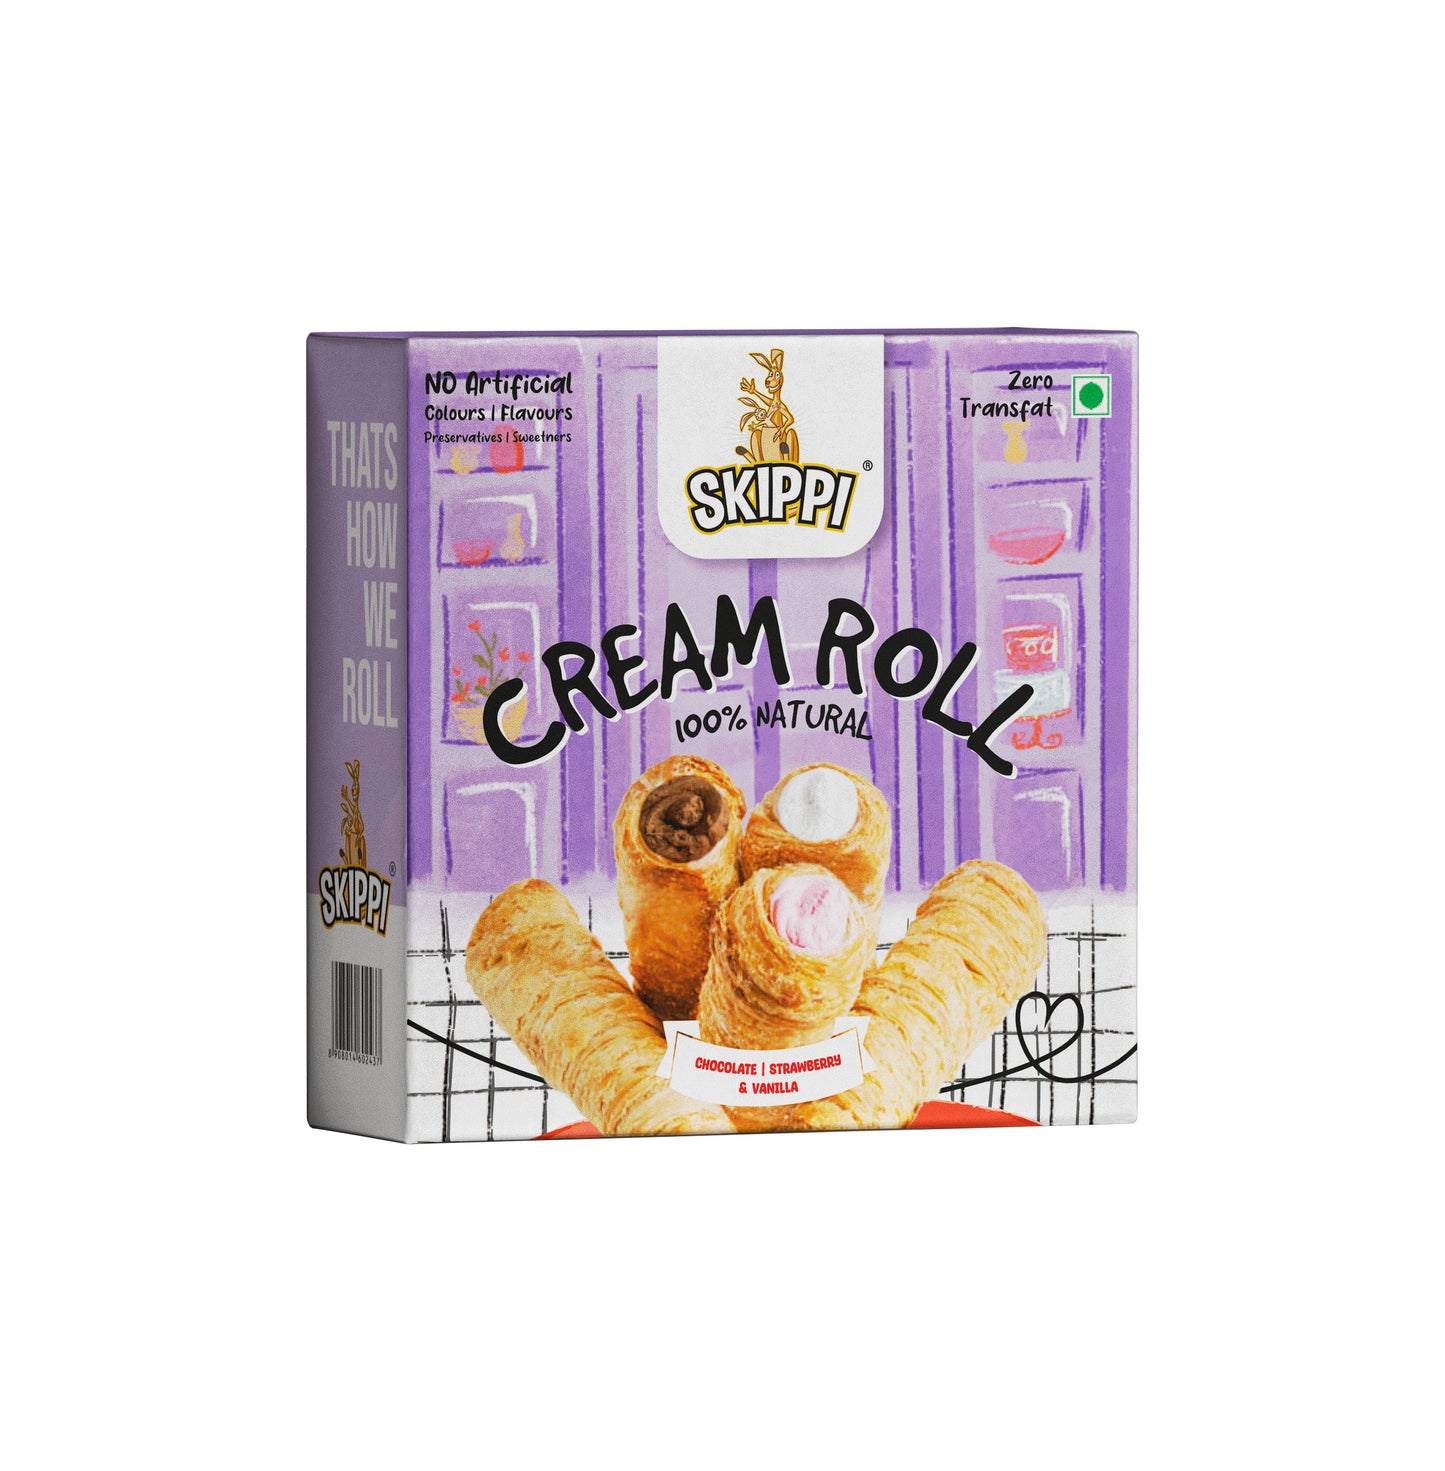 Skippi Cream Rolls,delightful assorted box of 6 rolls(180gm) 2 Vanilla,2 Chocolate & 2 Strawberry Flavor, Pack of 1 - Skippi Ice Pops